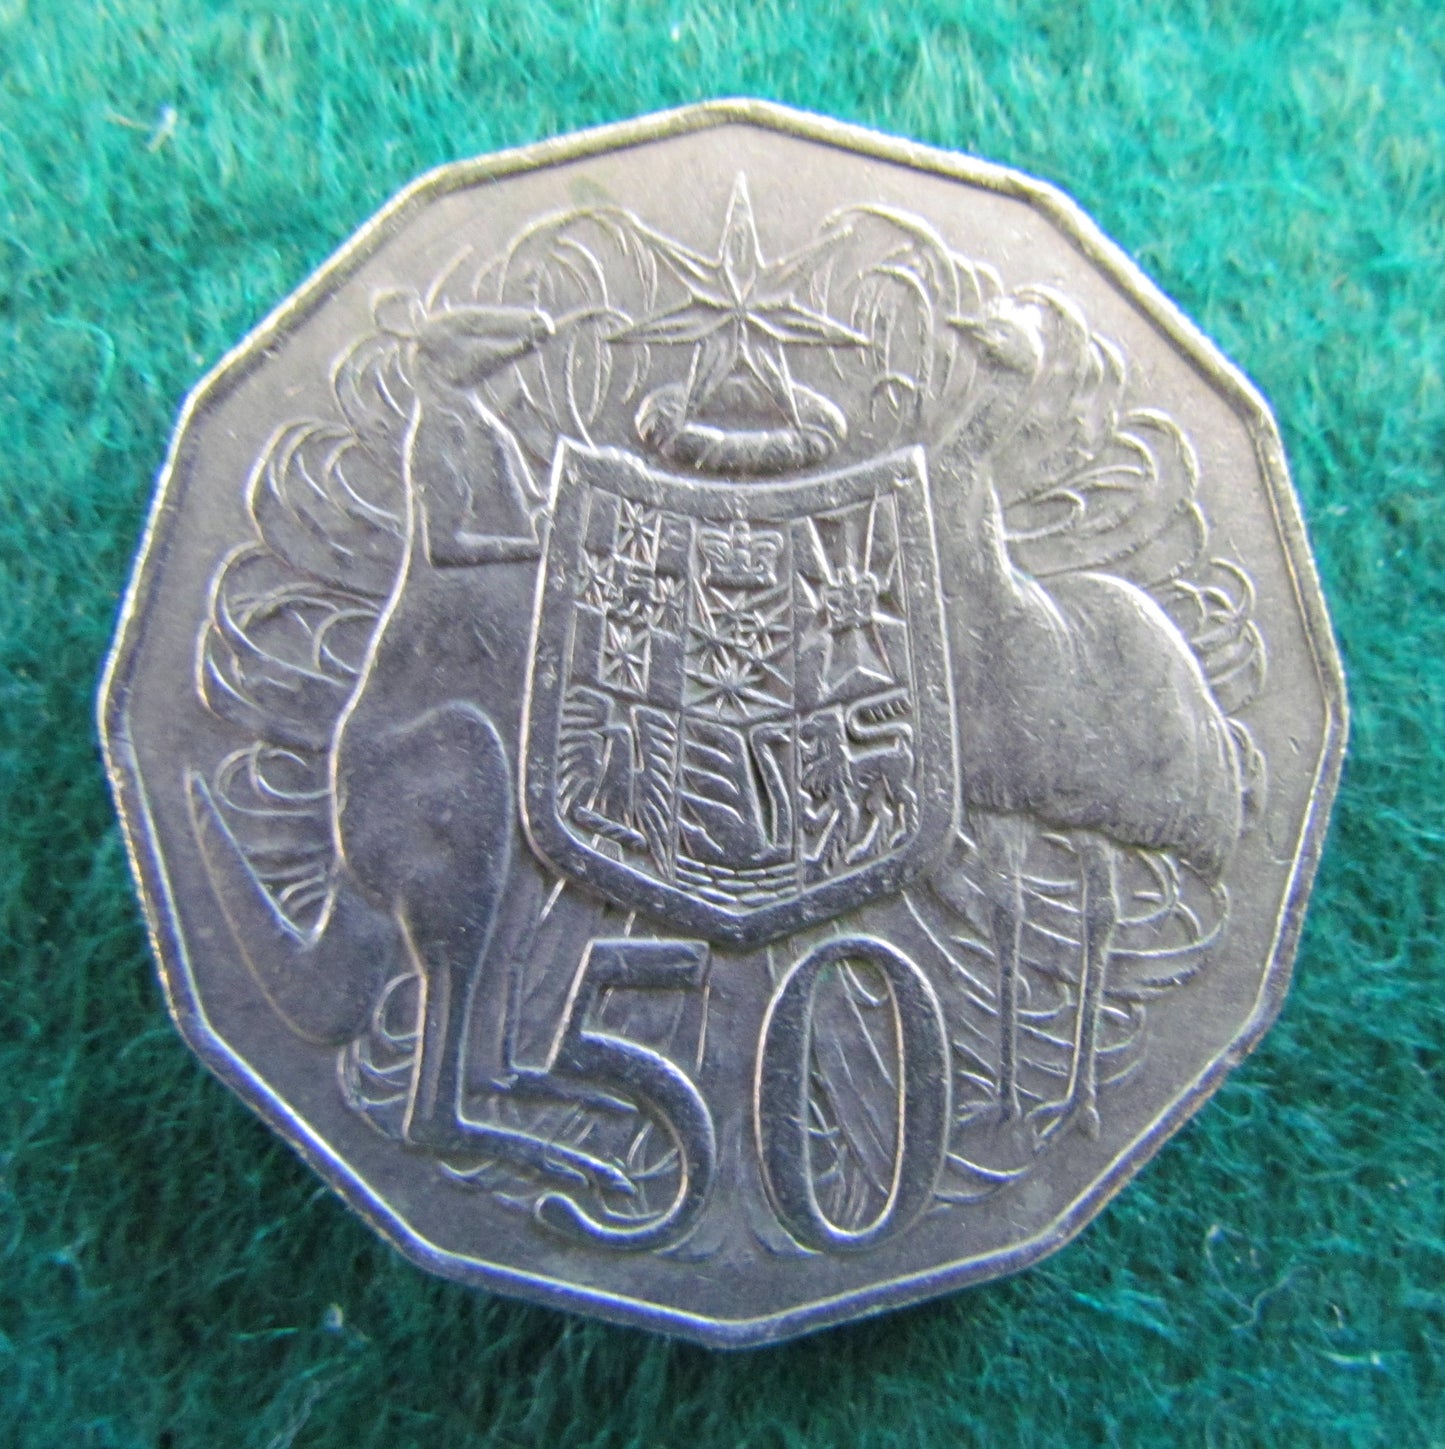 Australian 1983 Coat Of Arms 50 Cent Queen Elizabeth Coin - Circulated